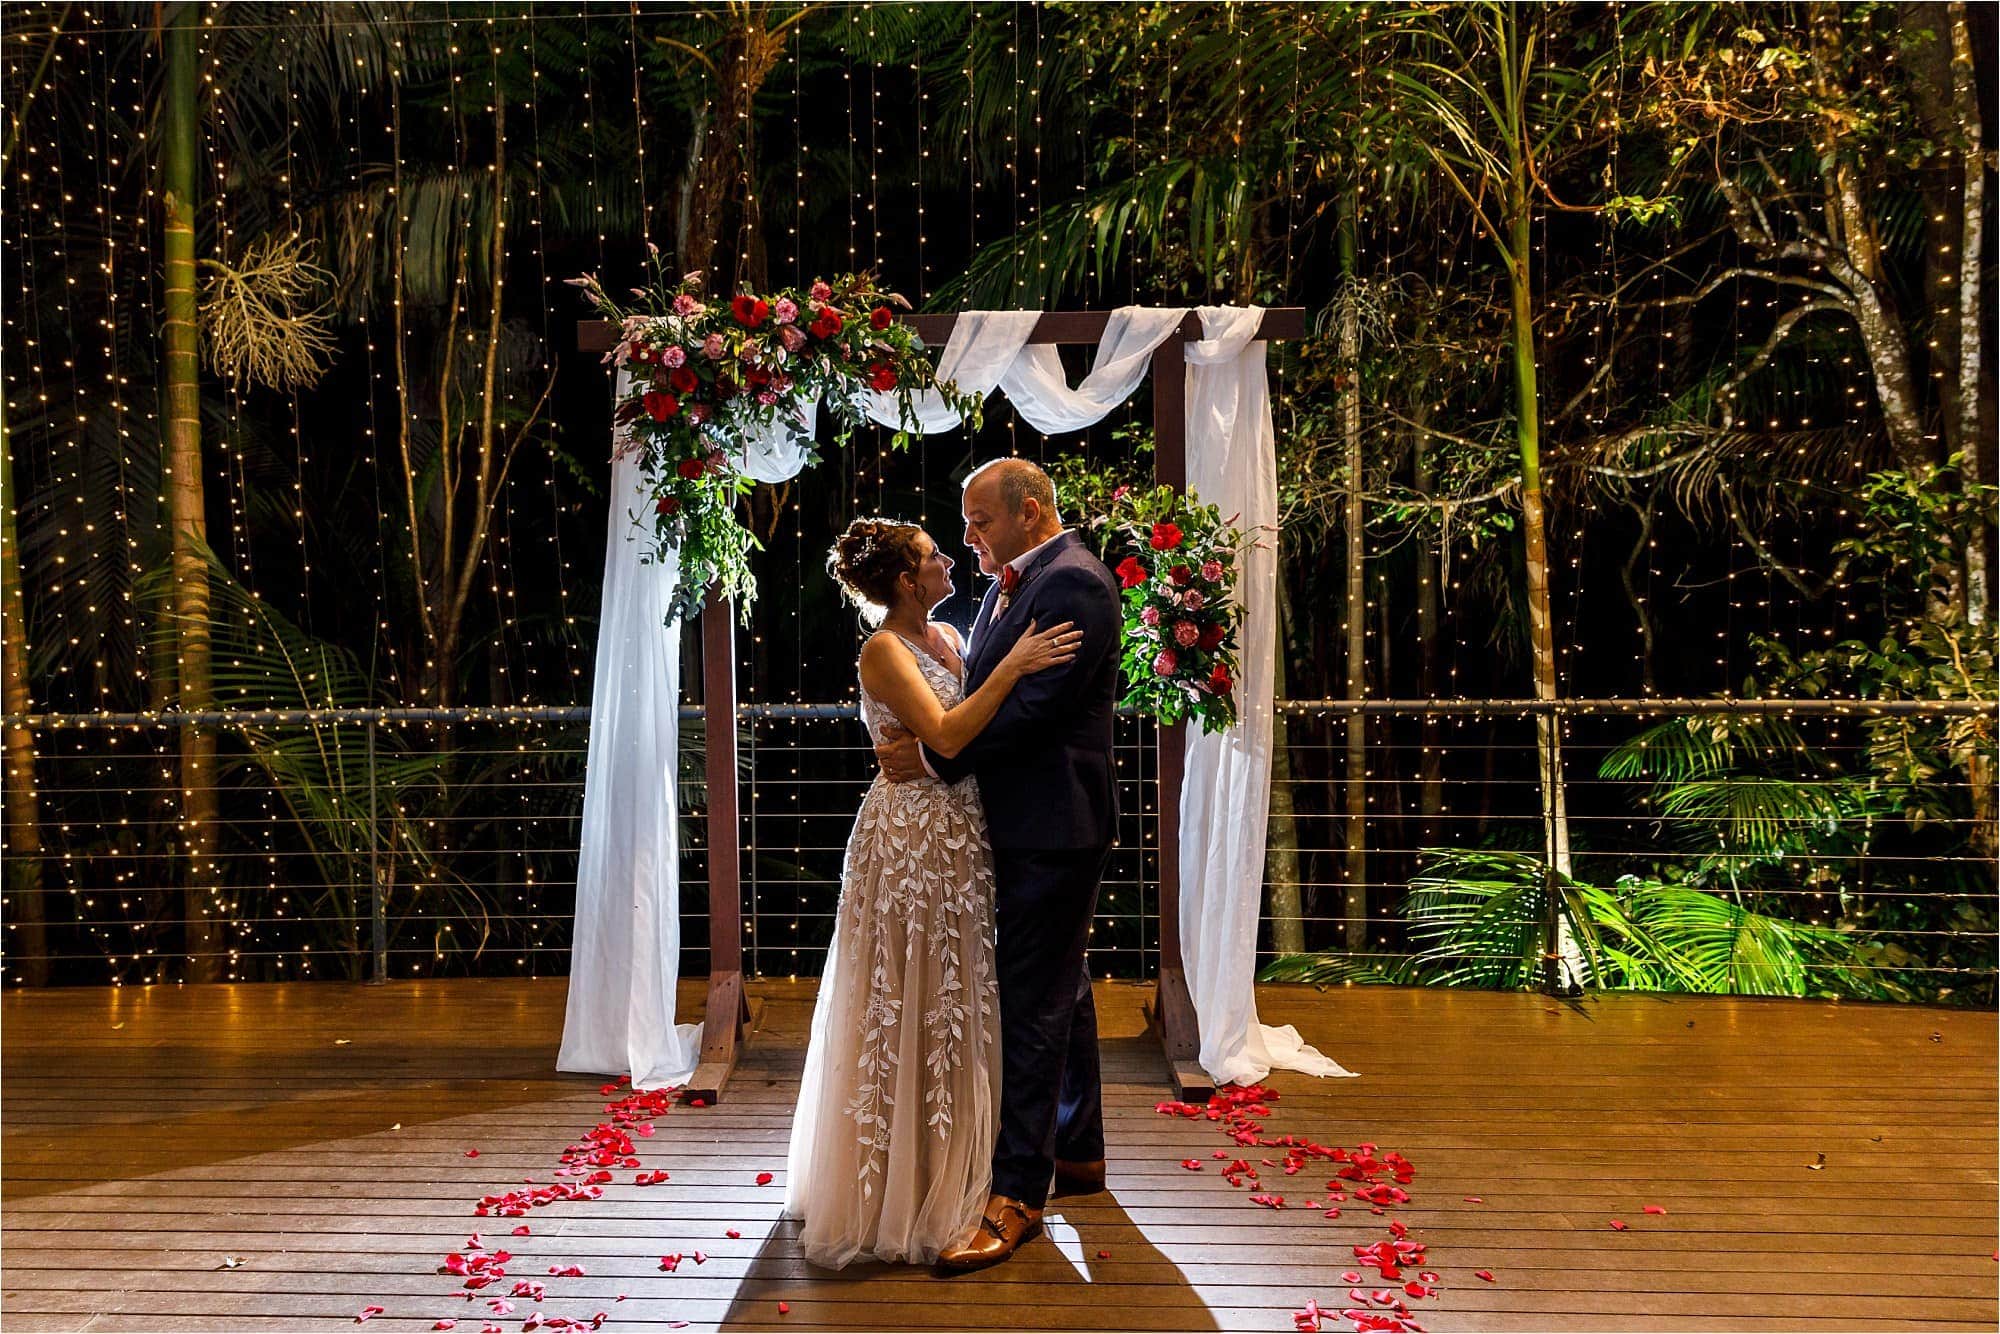 Pethers Rainforest Resort Intimate Wedding Venue